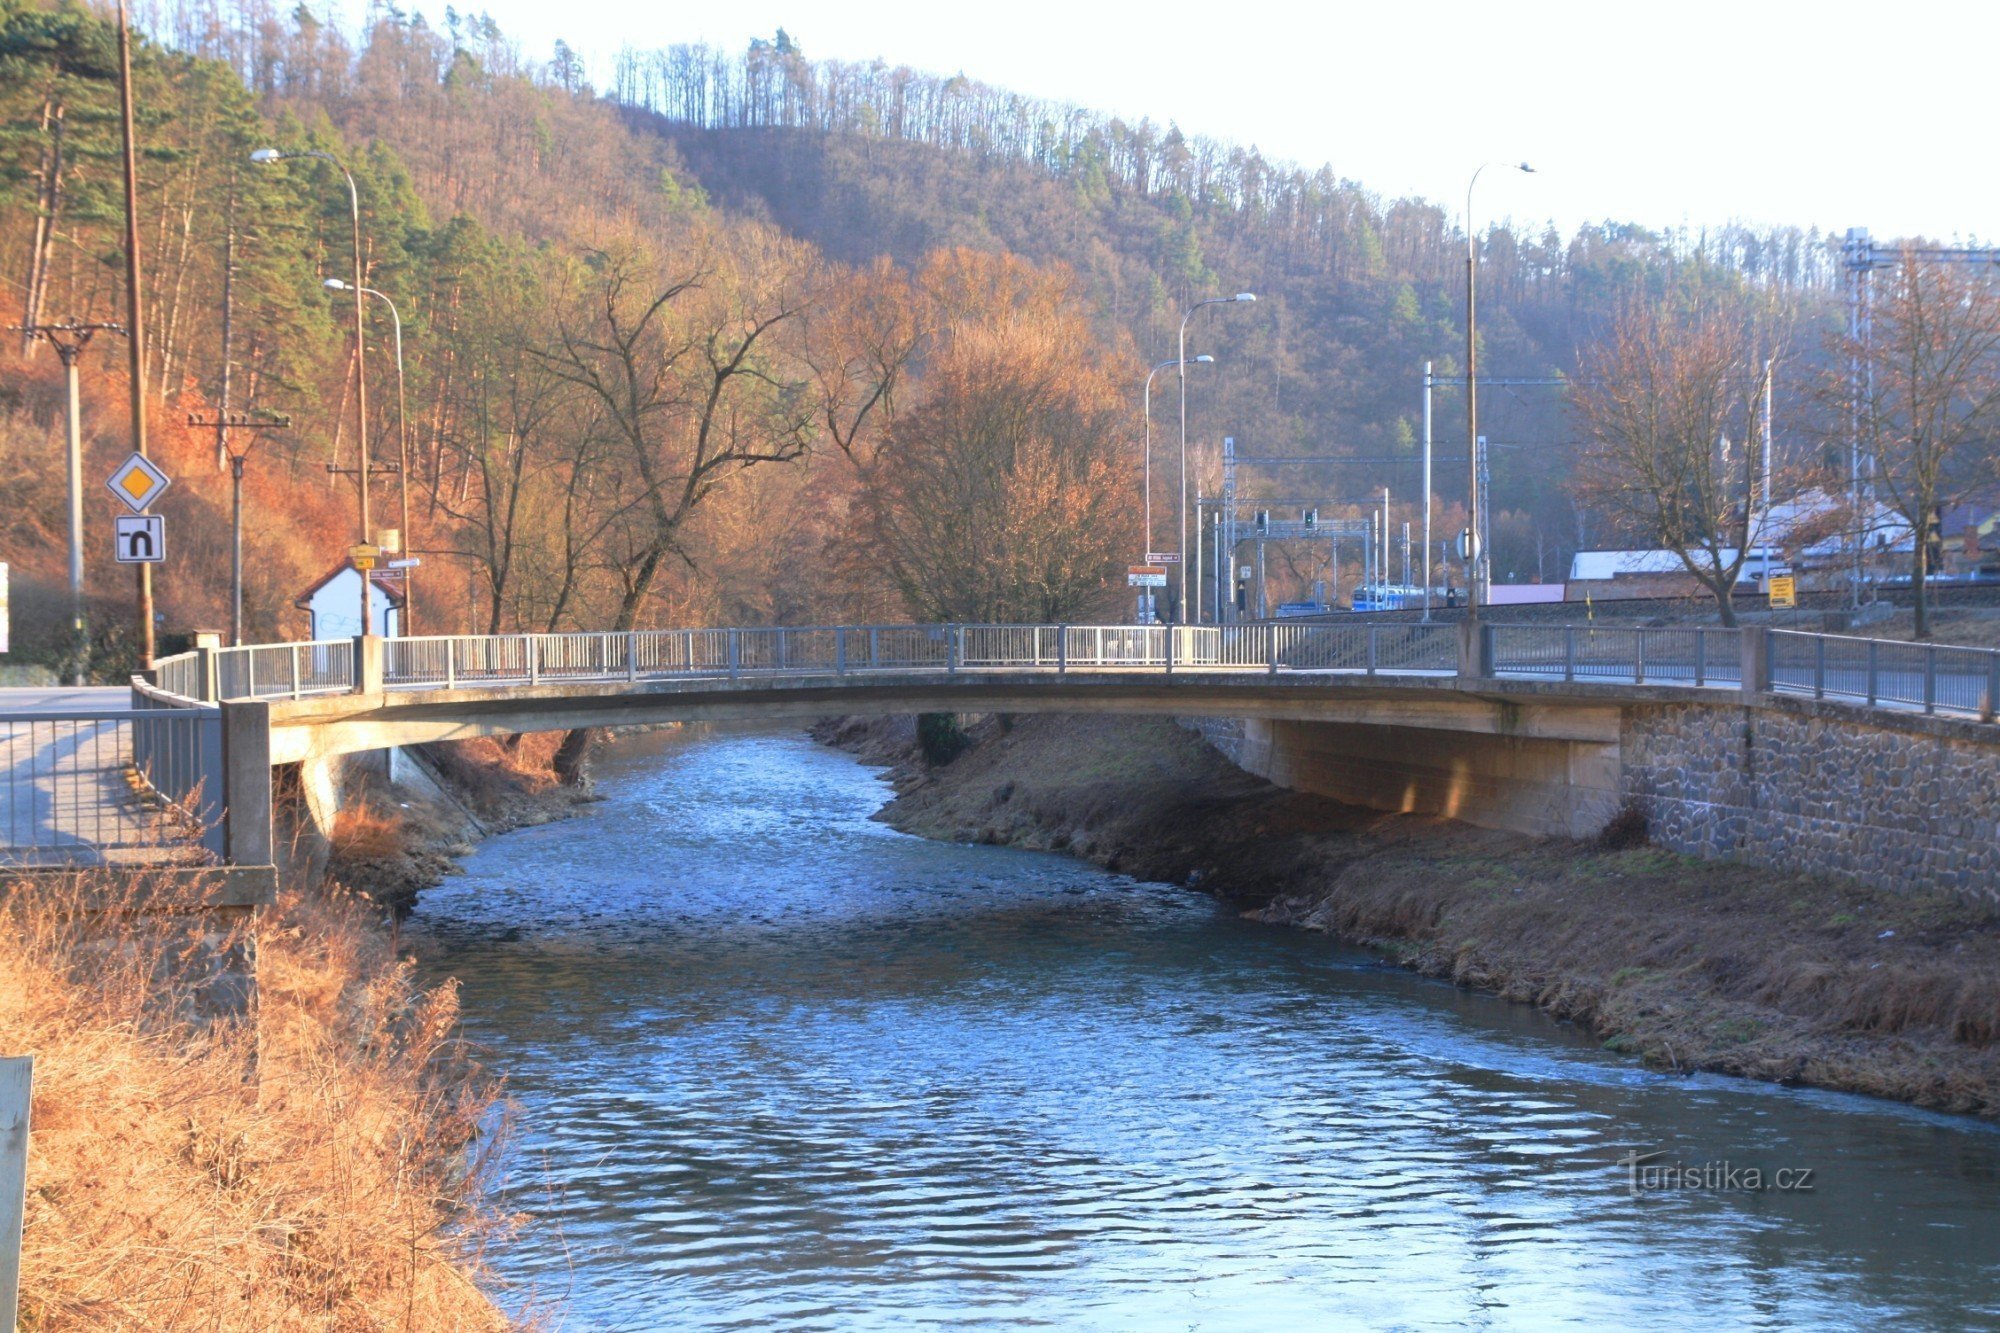 Bron över floden Svitava nära Sokolovna